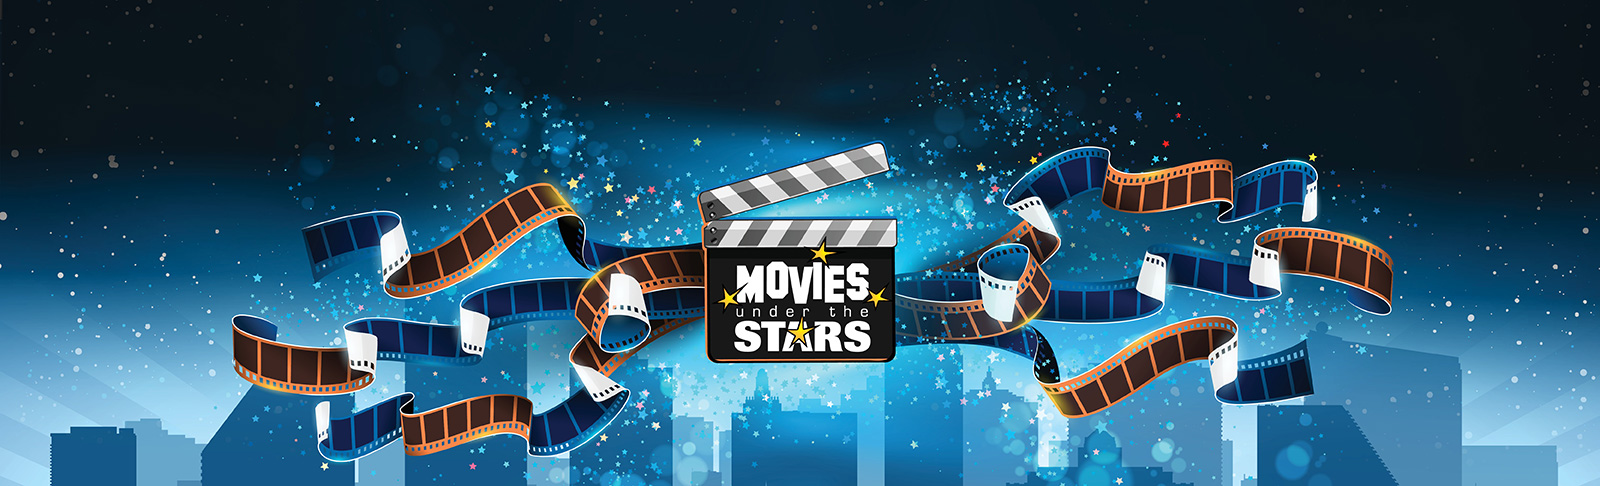 Movies Under The Stars 